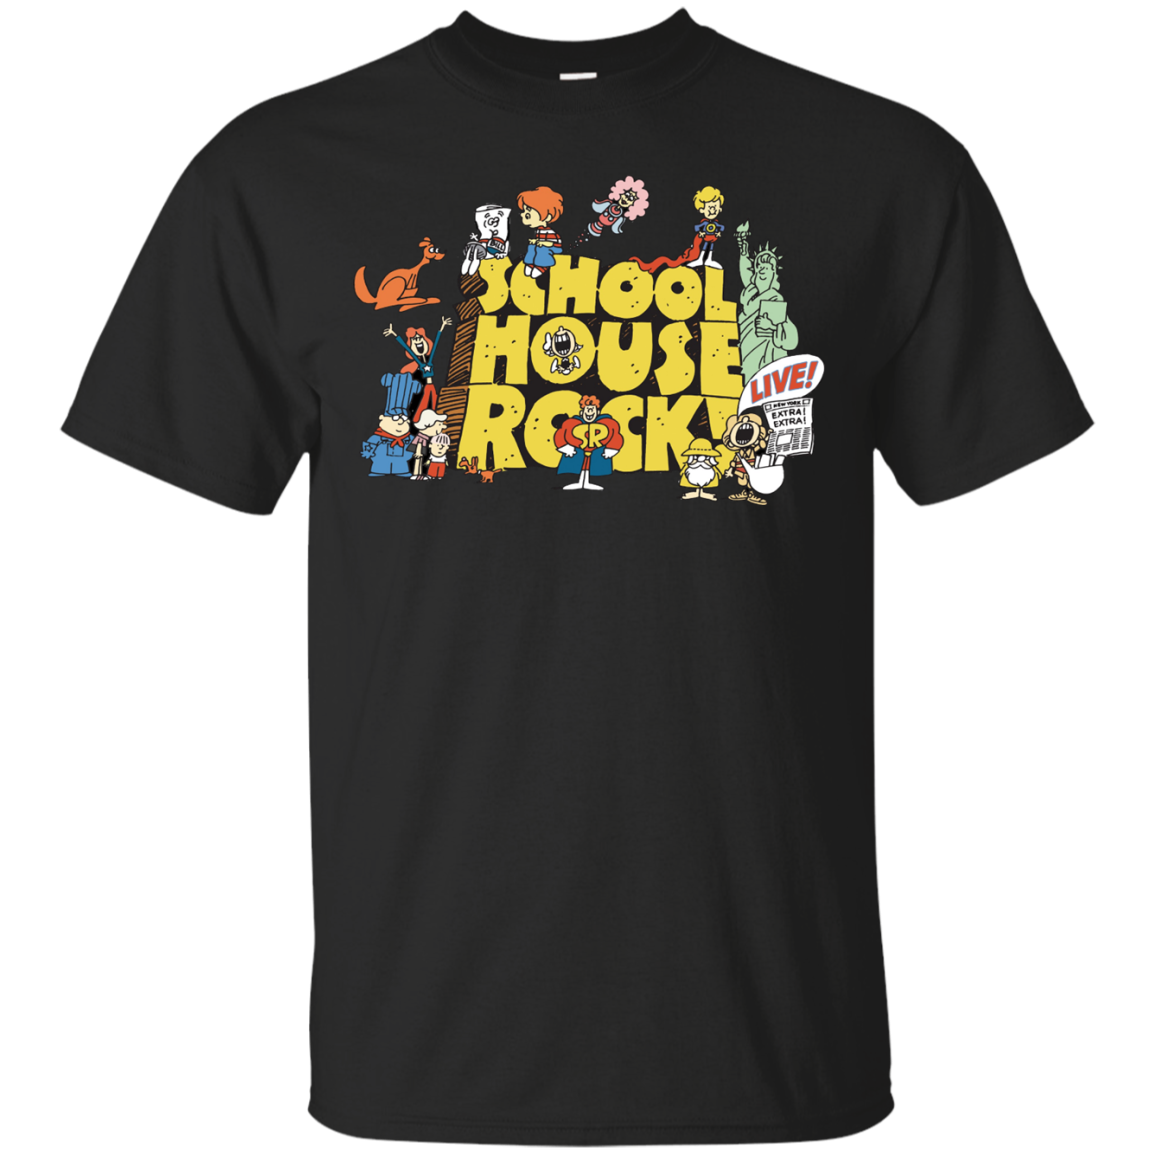 Shoolhouse Rock! shirt, youth shirt